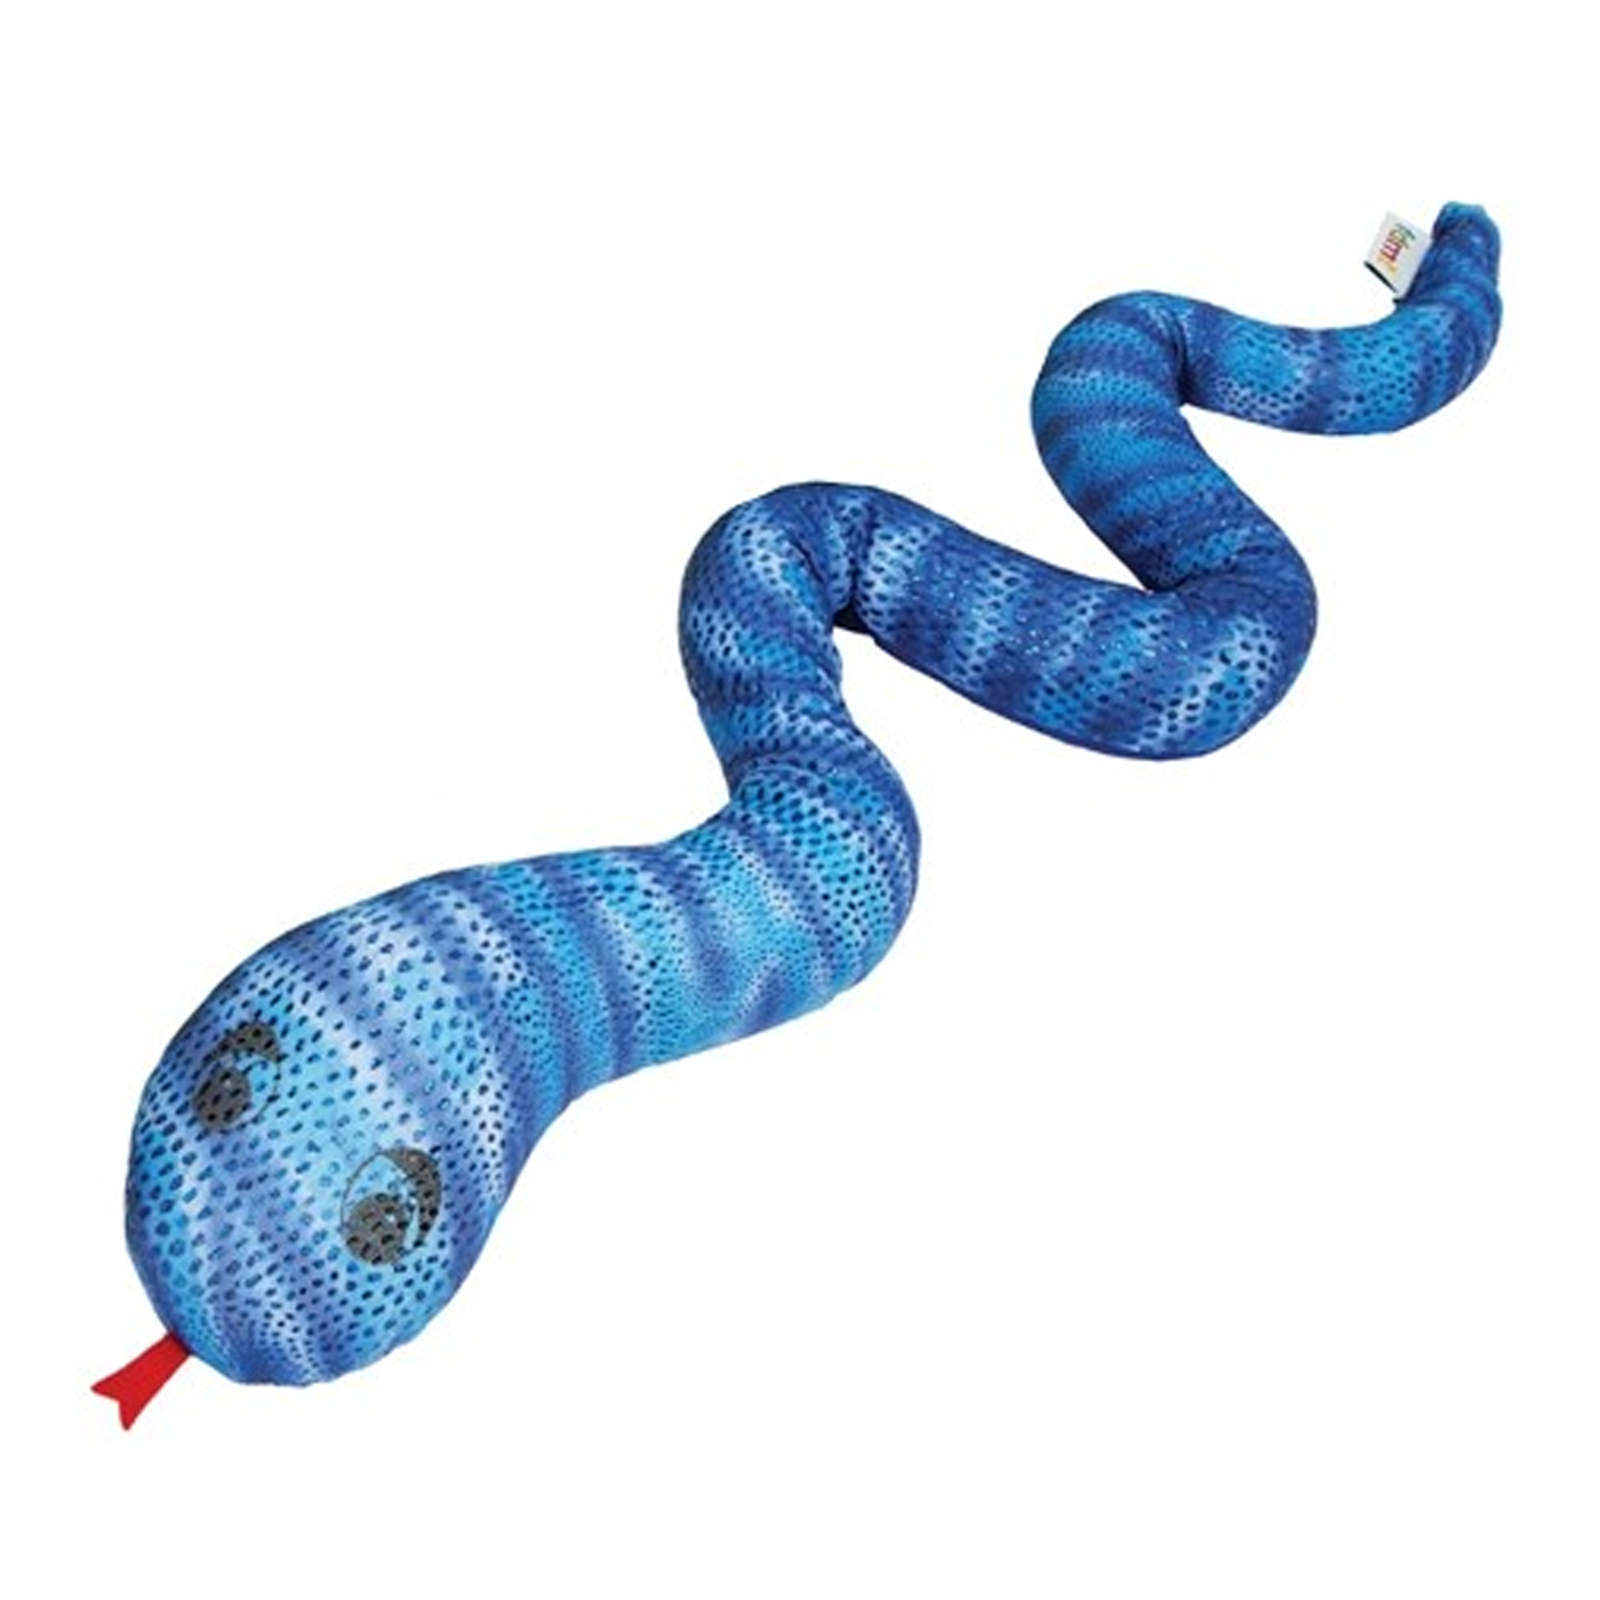 manimo manimo - Snake Blue 1 kg image number null